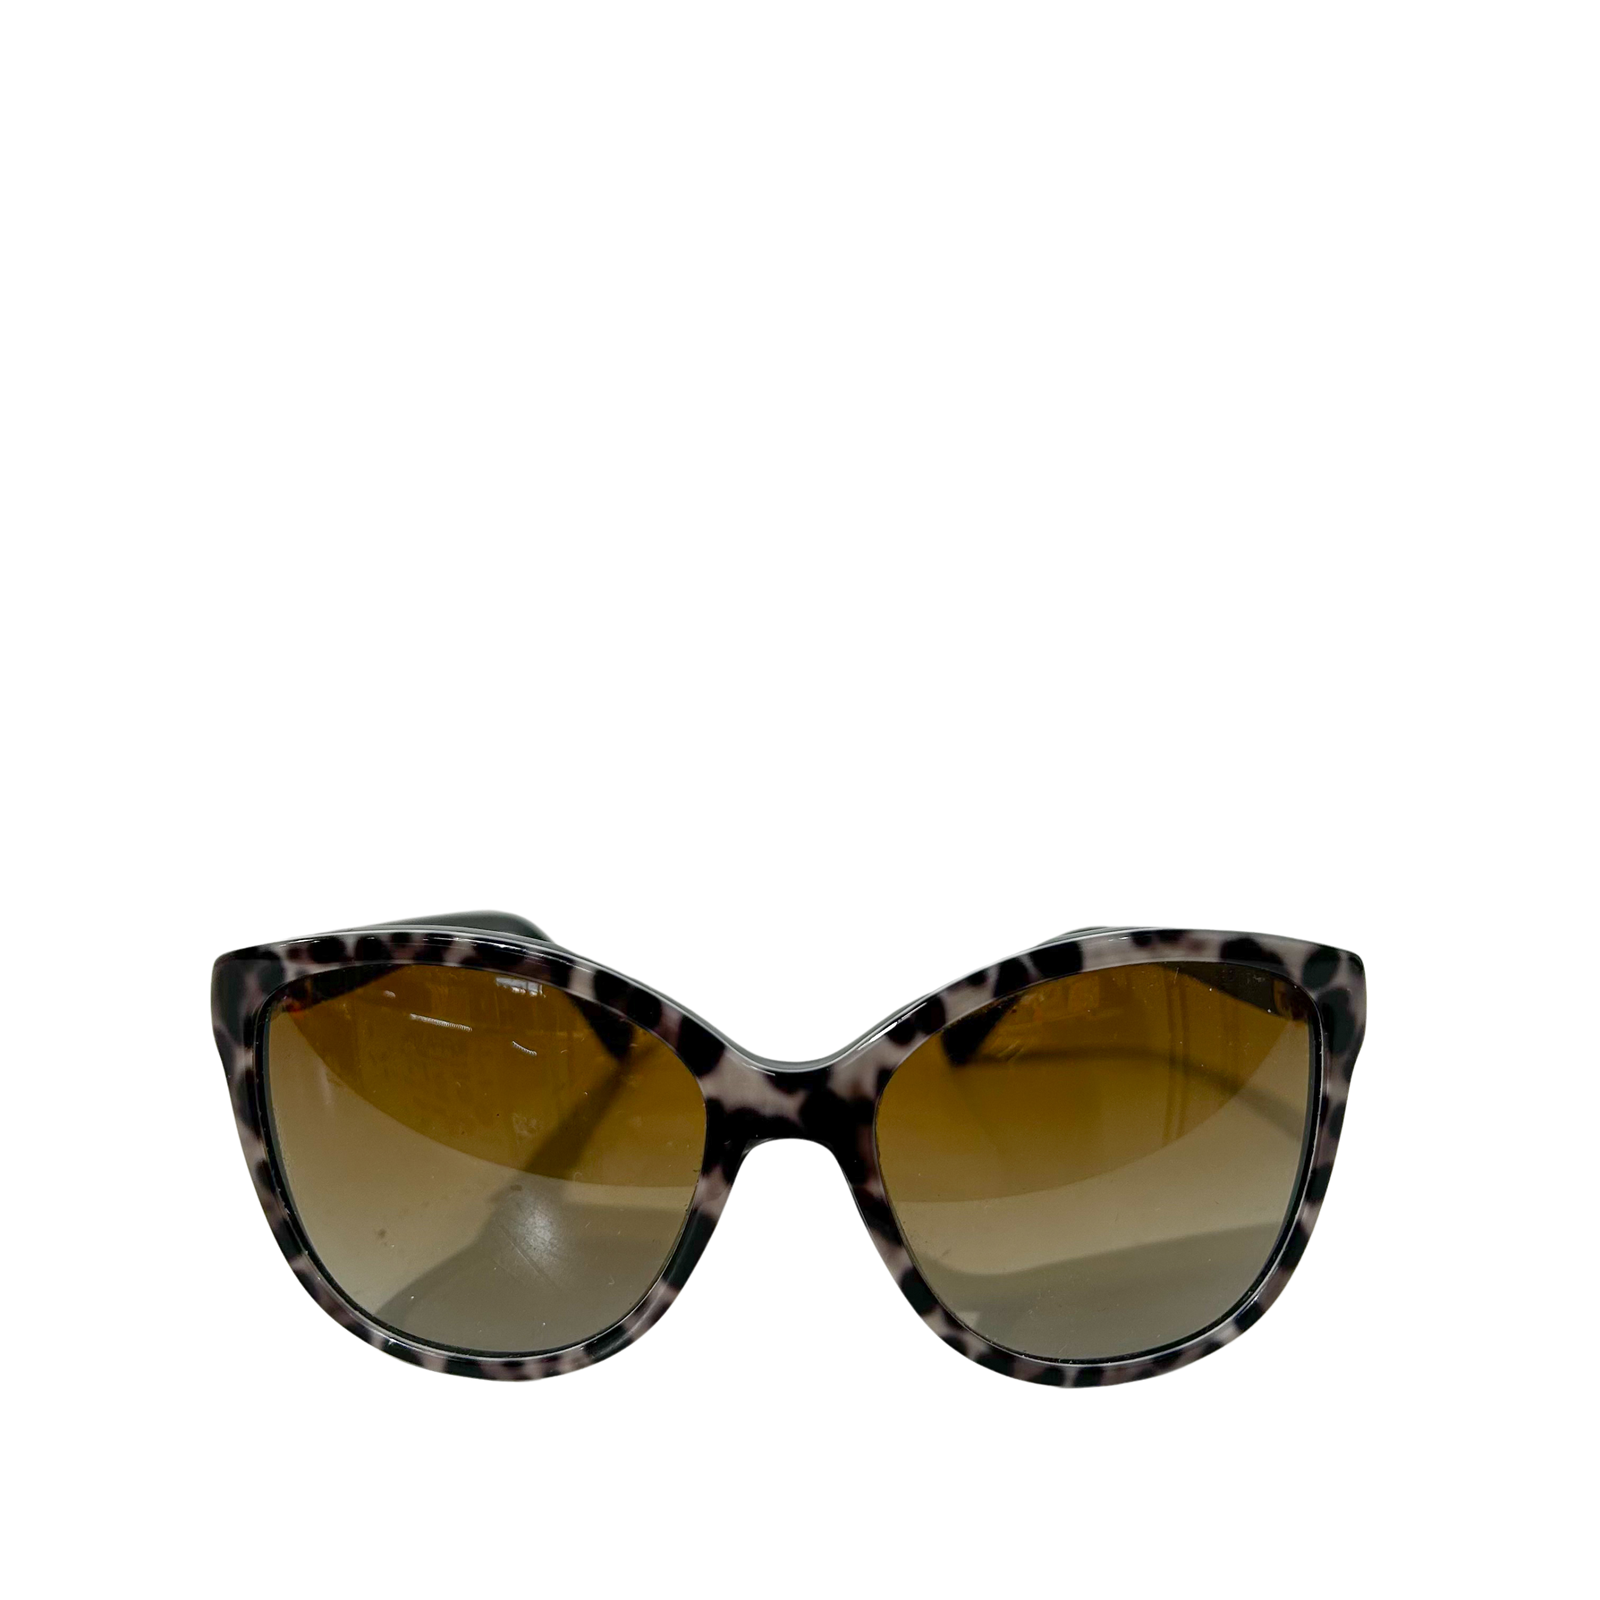 Tortoise Shell Sunglasses